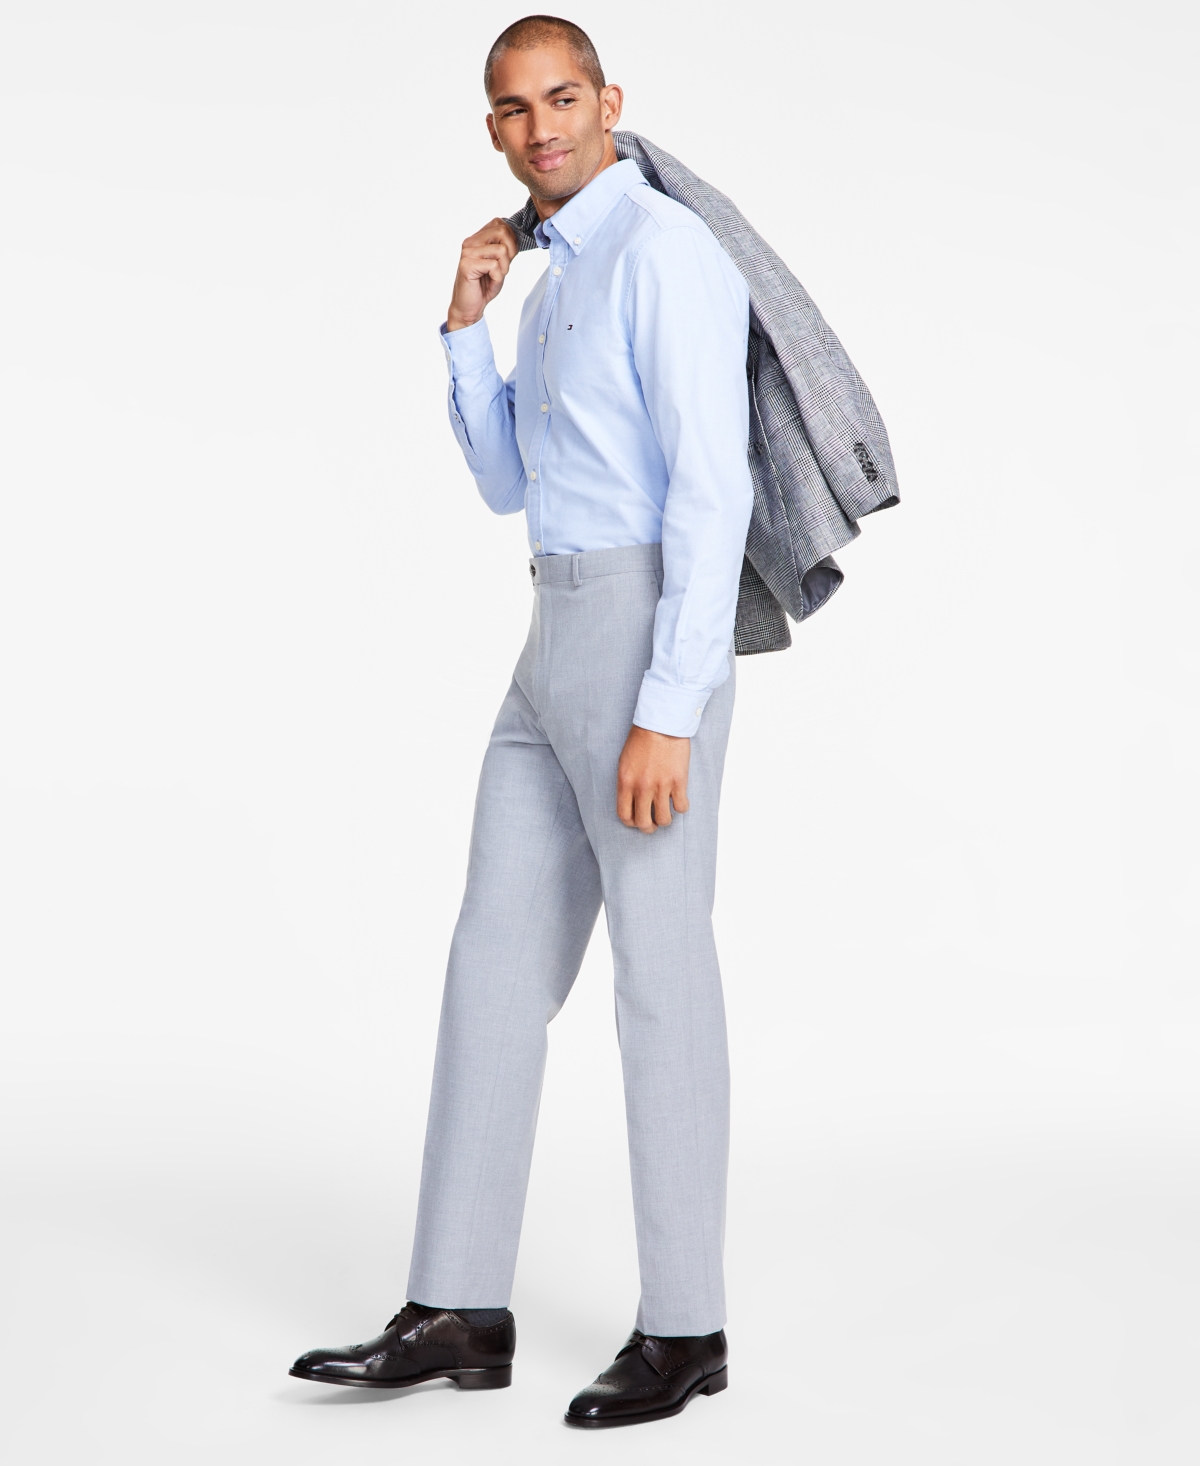 Michael Kors Men's Classic Fit Performance Dress Pants In Light Grey